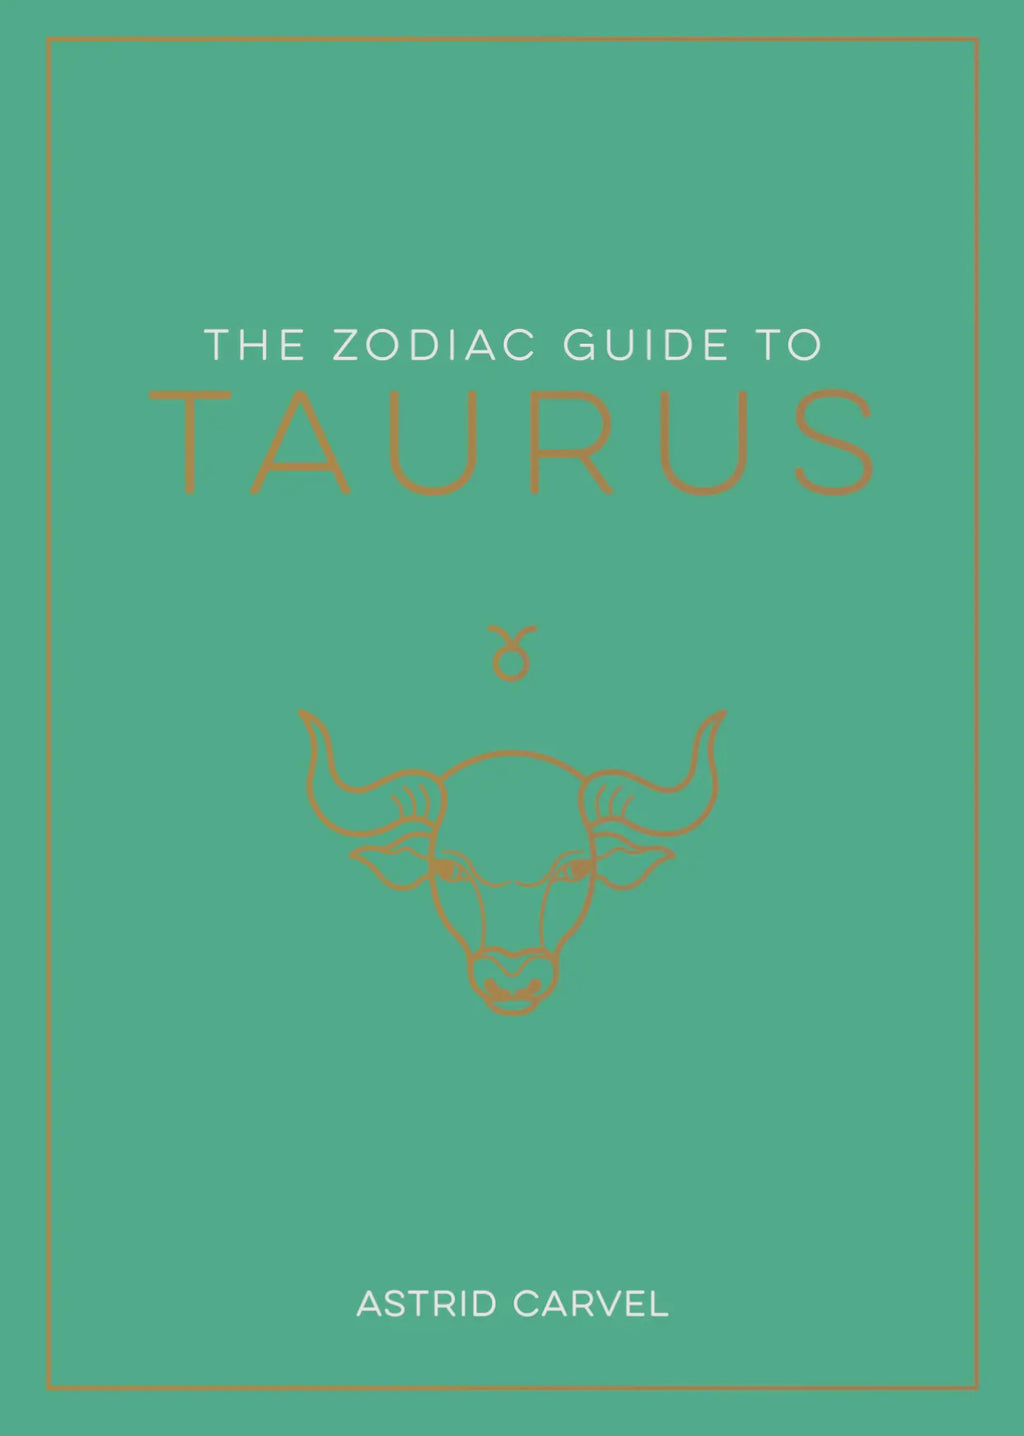 The Zodiac Guide to: Taurus